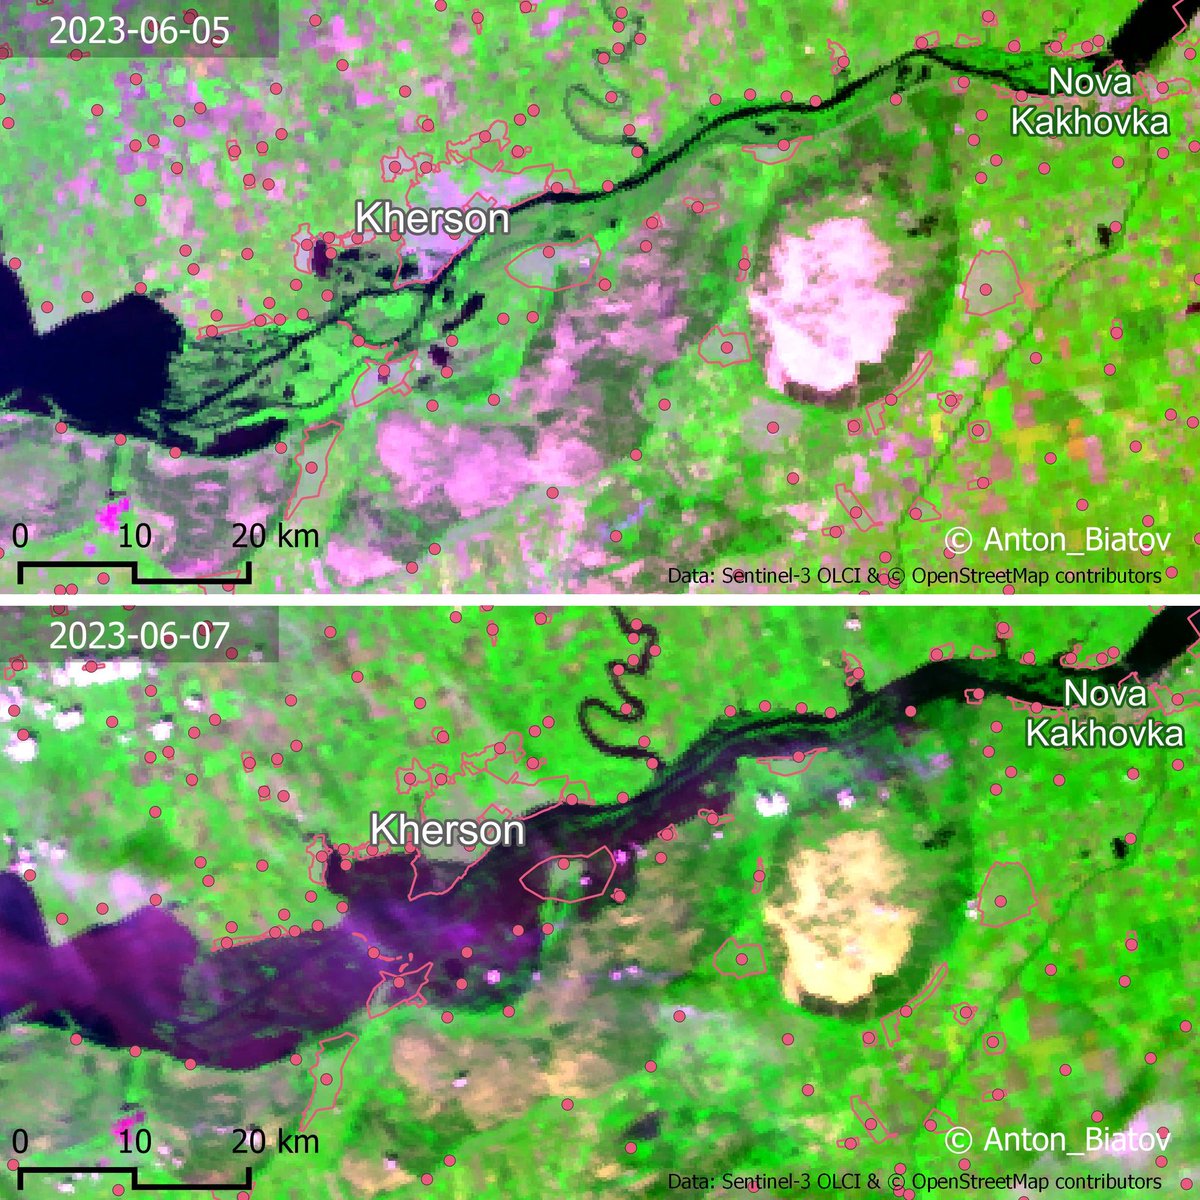 Kherson flooded area, Ukraine
#catastrophe #disaster

Data #Sentinel3 #EuropeanSpaceAgency #Copernicus
& #openstreetmap

#QGIS #dataviz #sentinel #flood #digitalmap #gis #satelliteimagery #mapping #easteurope #nature #cartography
#gisnaturalist